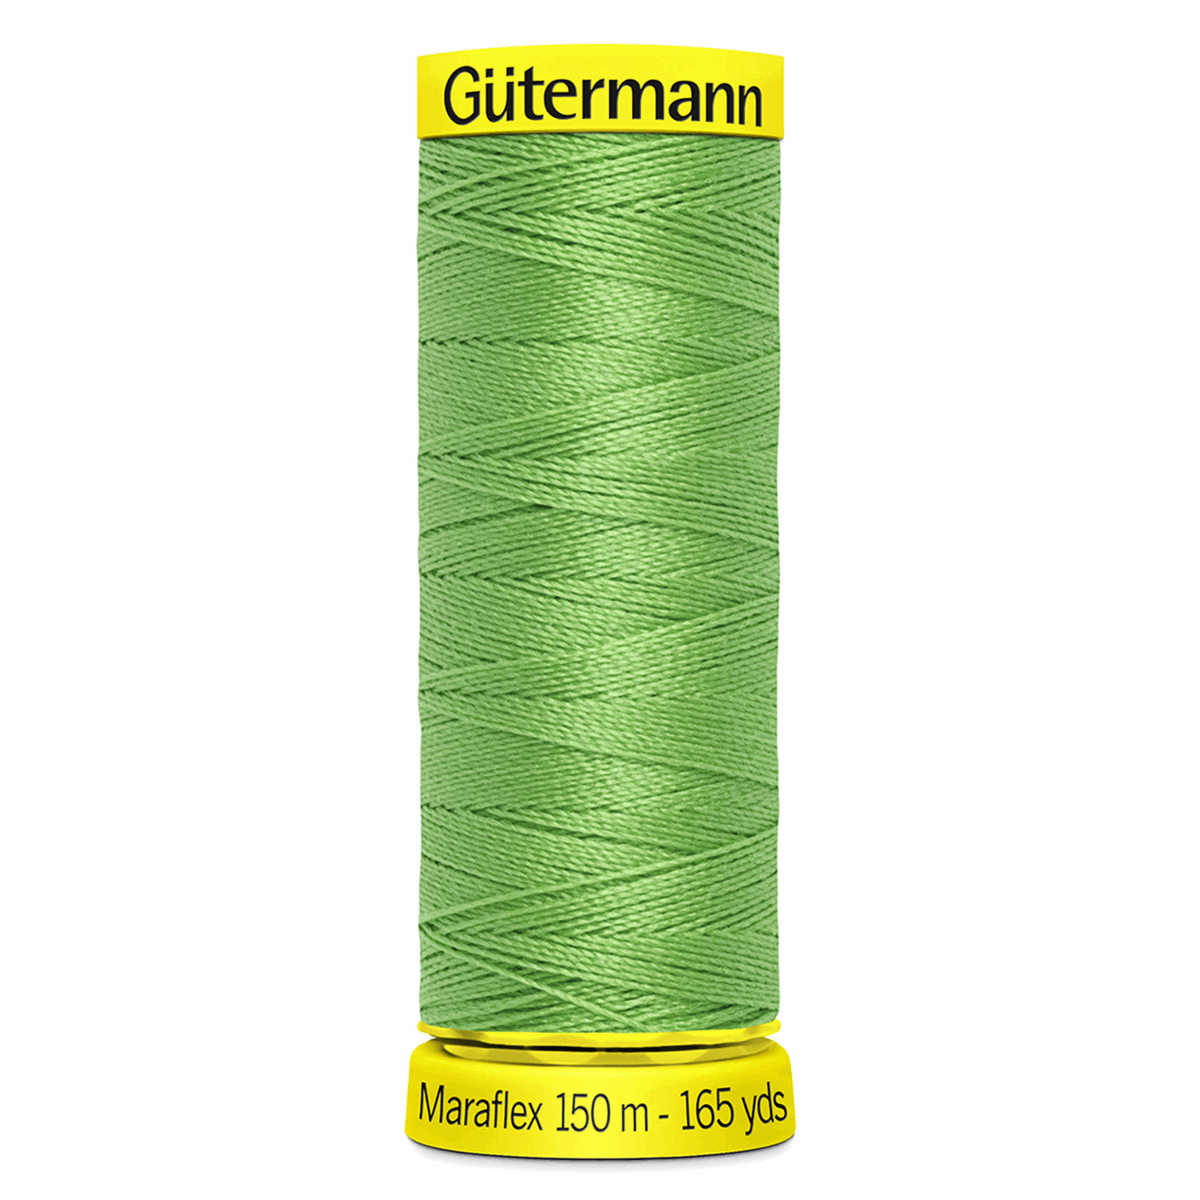 Gutermann Maraflex Elastic Sewing Thread 150m Lime Green 154